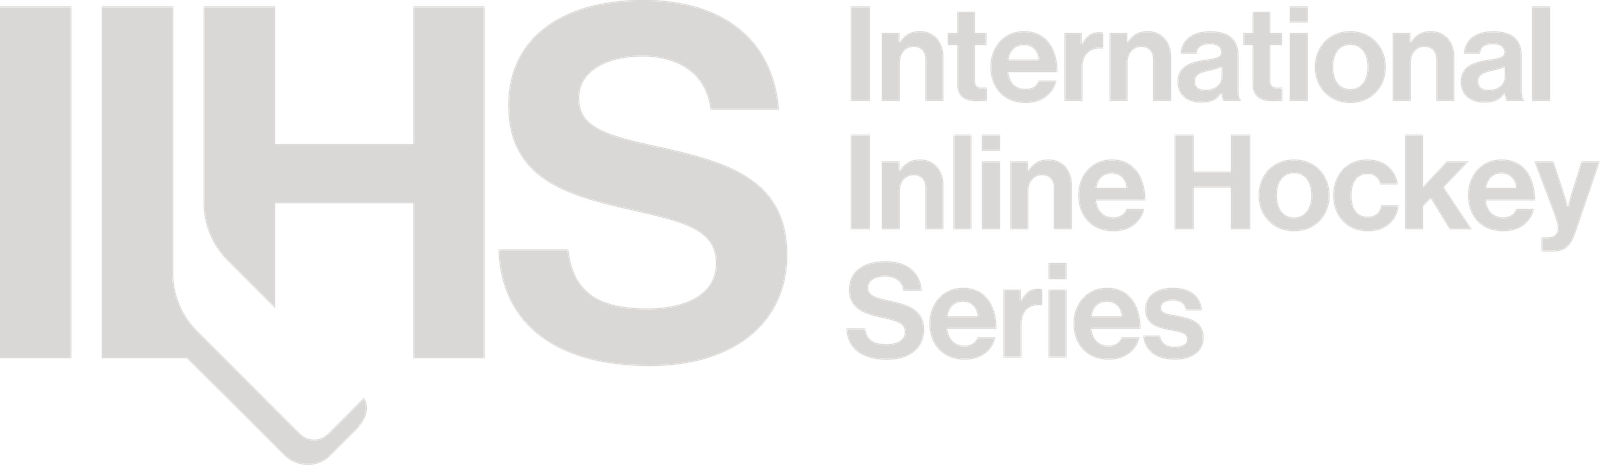 International Inline Hockey Series Logo